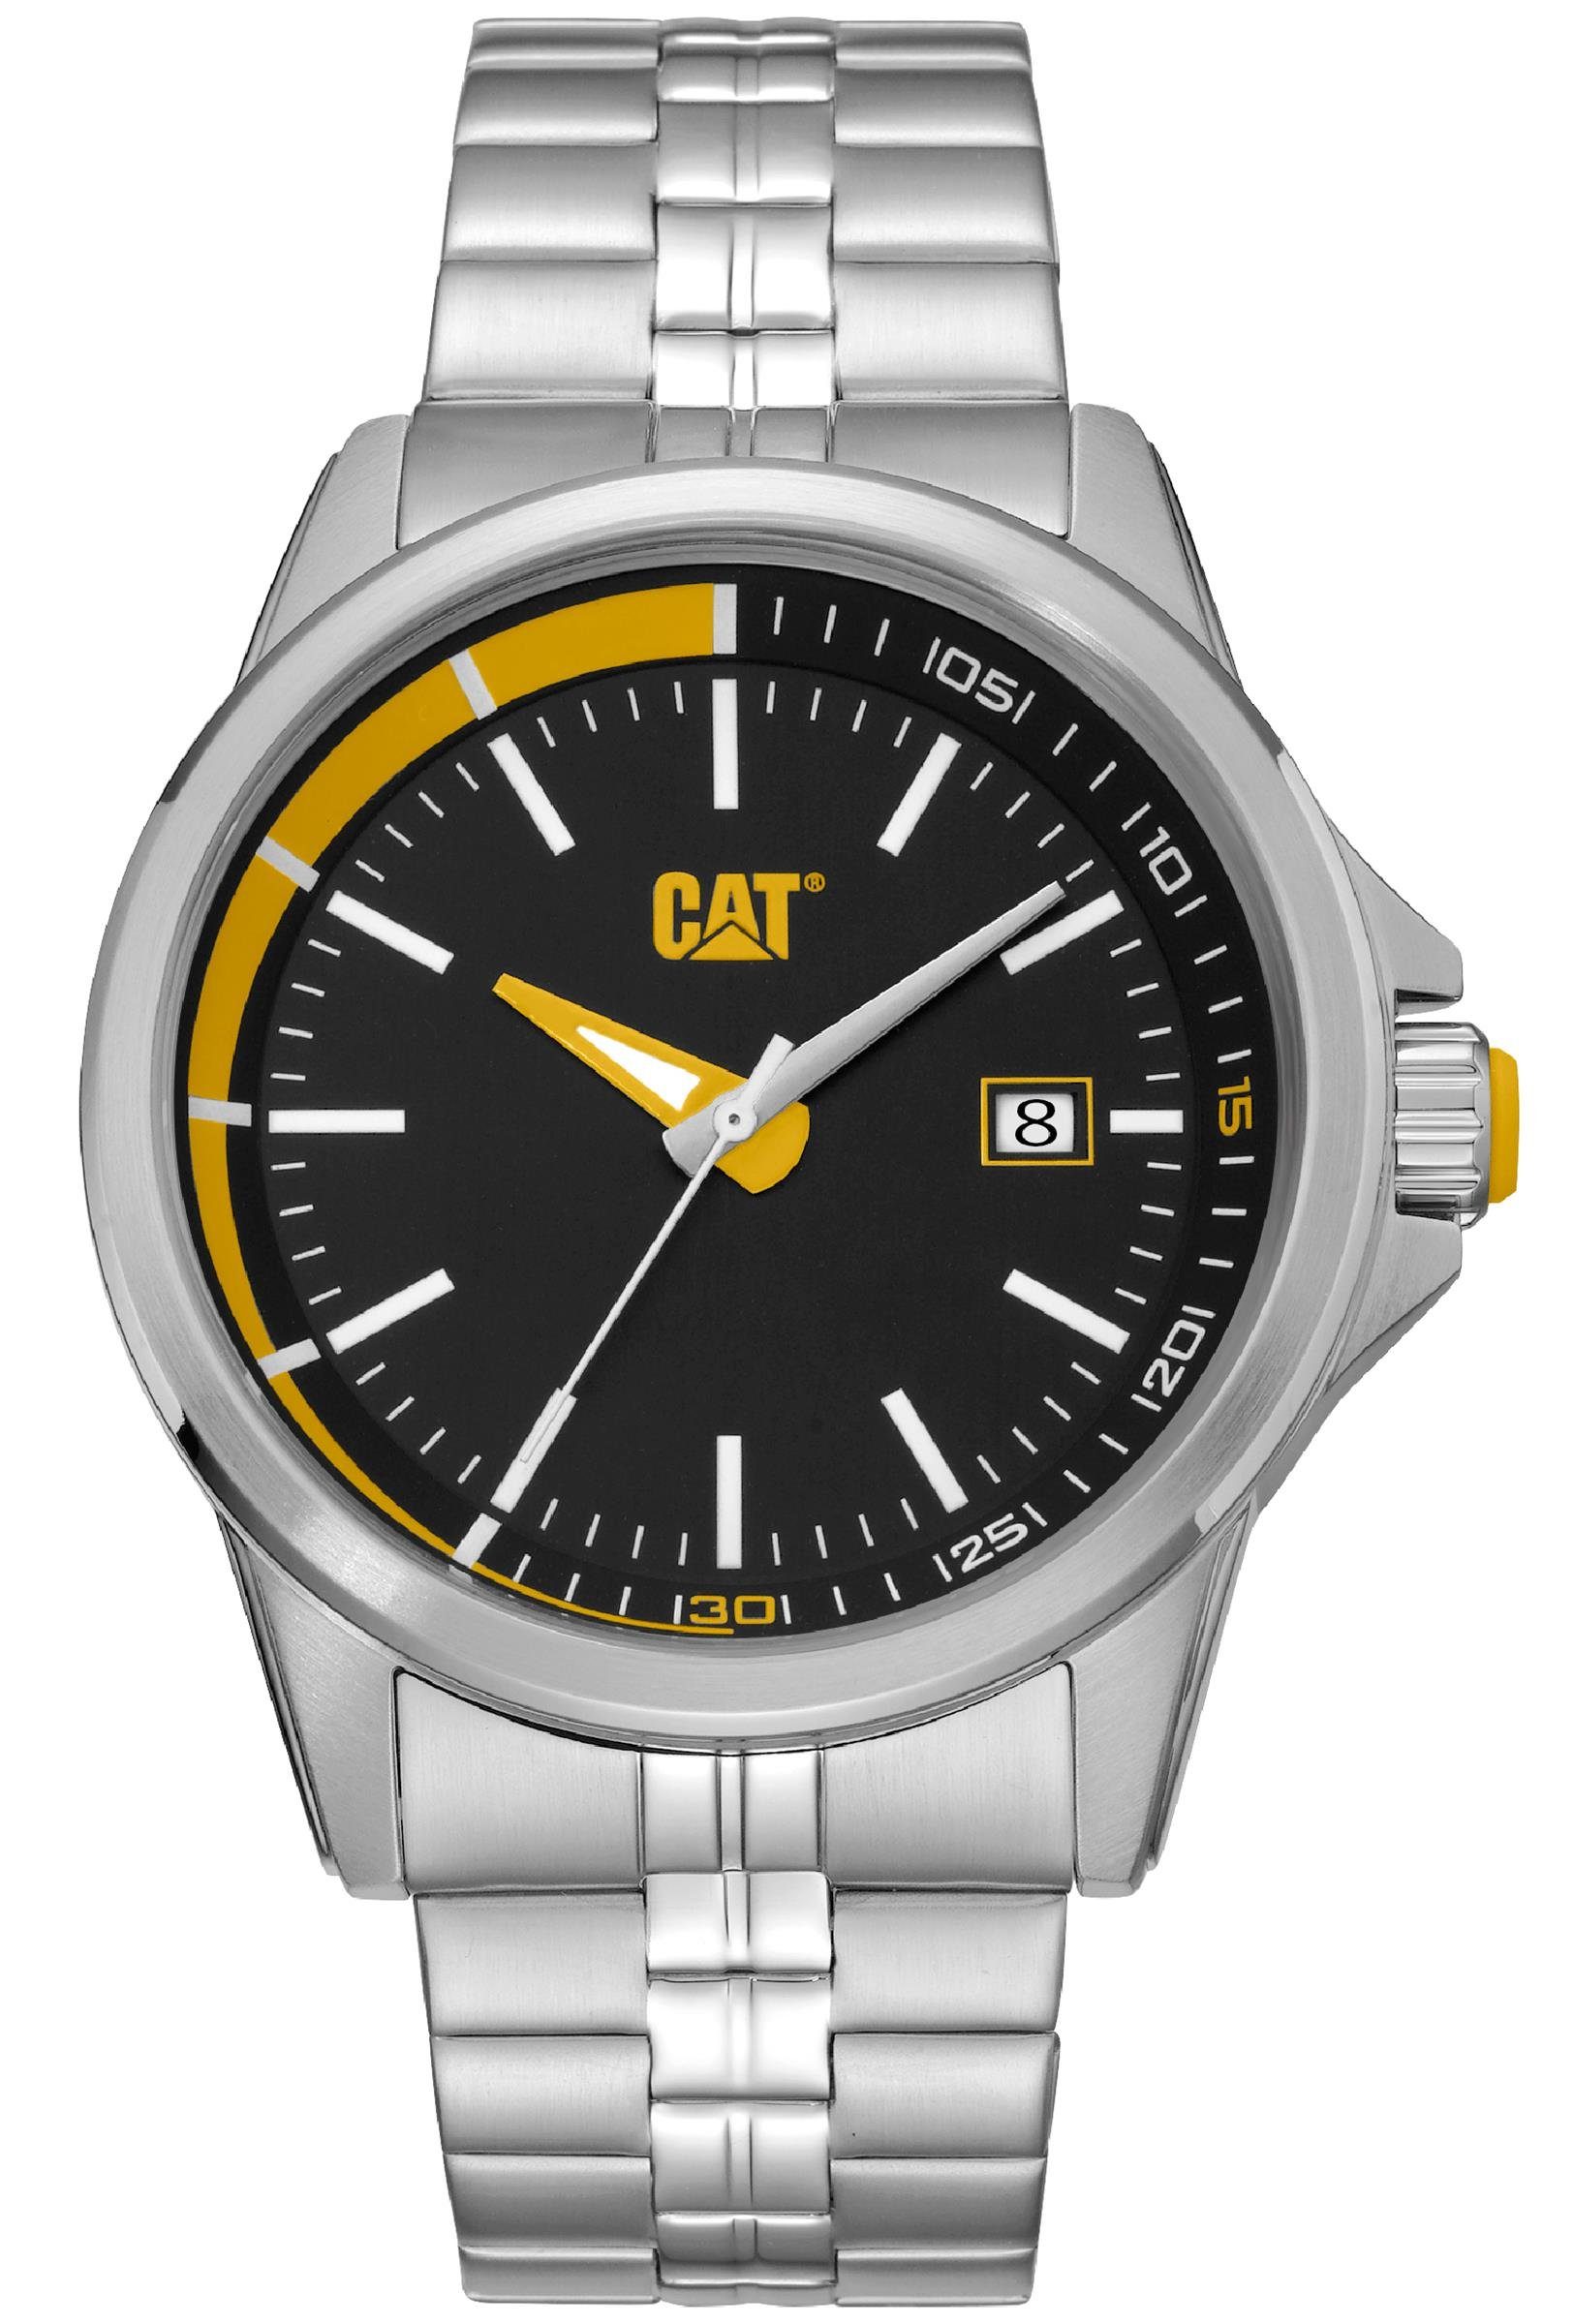 CAT CATERPILLA Chronograph CAT Armbanduhr - Slider schwarz/gelb, Edelstahl,  43mm, (1-tlg), CAT Bulldozer-Gravur auf Rückseite und Armband